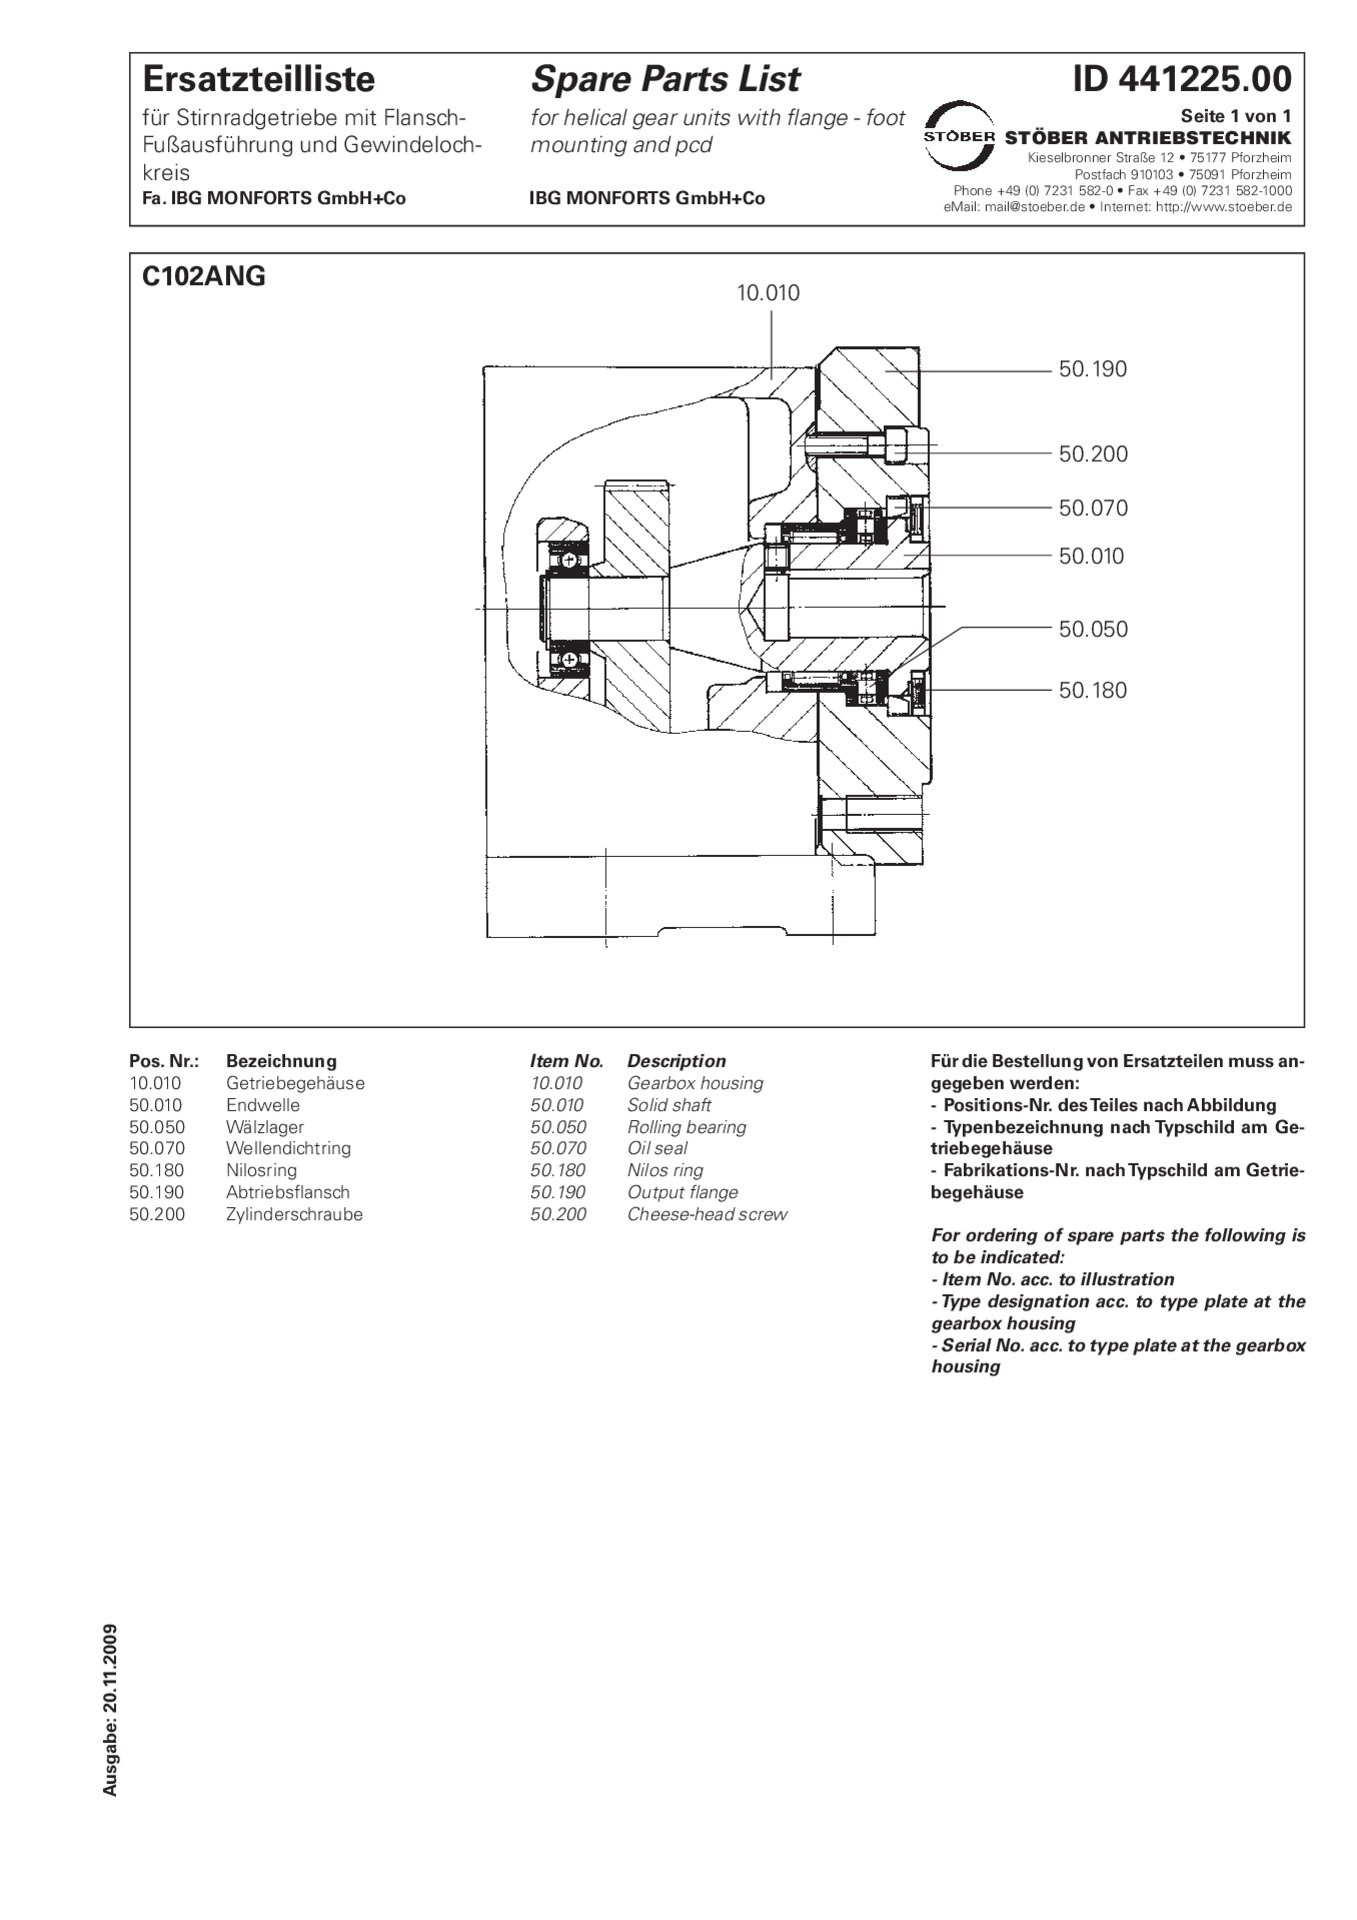 Listino dei pezzi di ricambio C102 ANG (IBG Monforts GmbH + Co.)